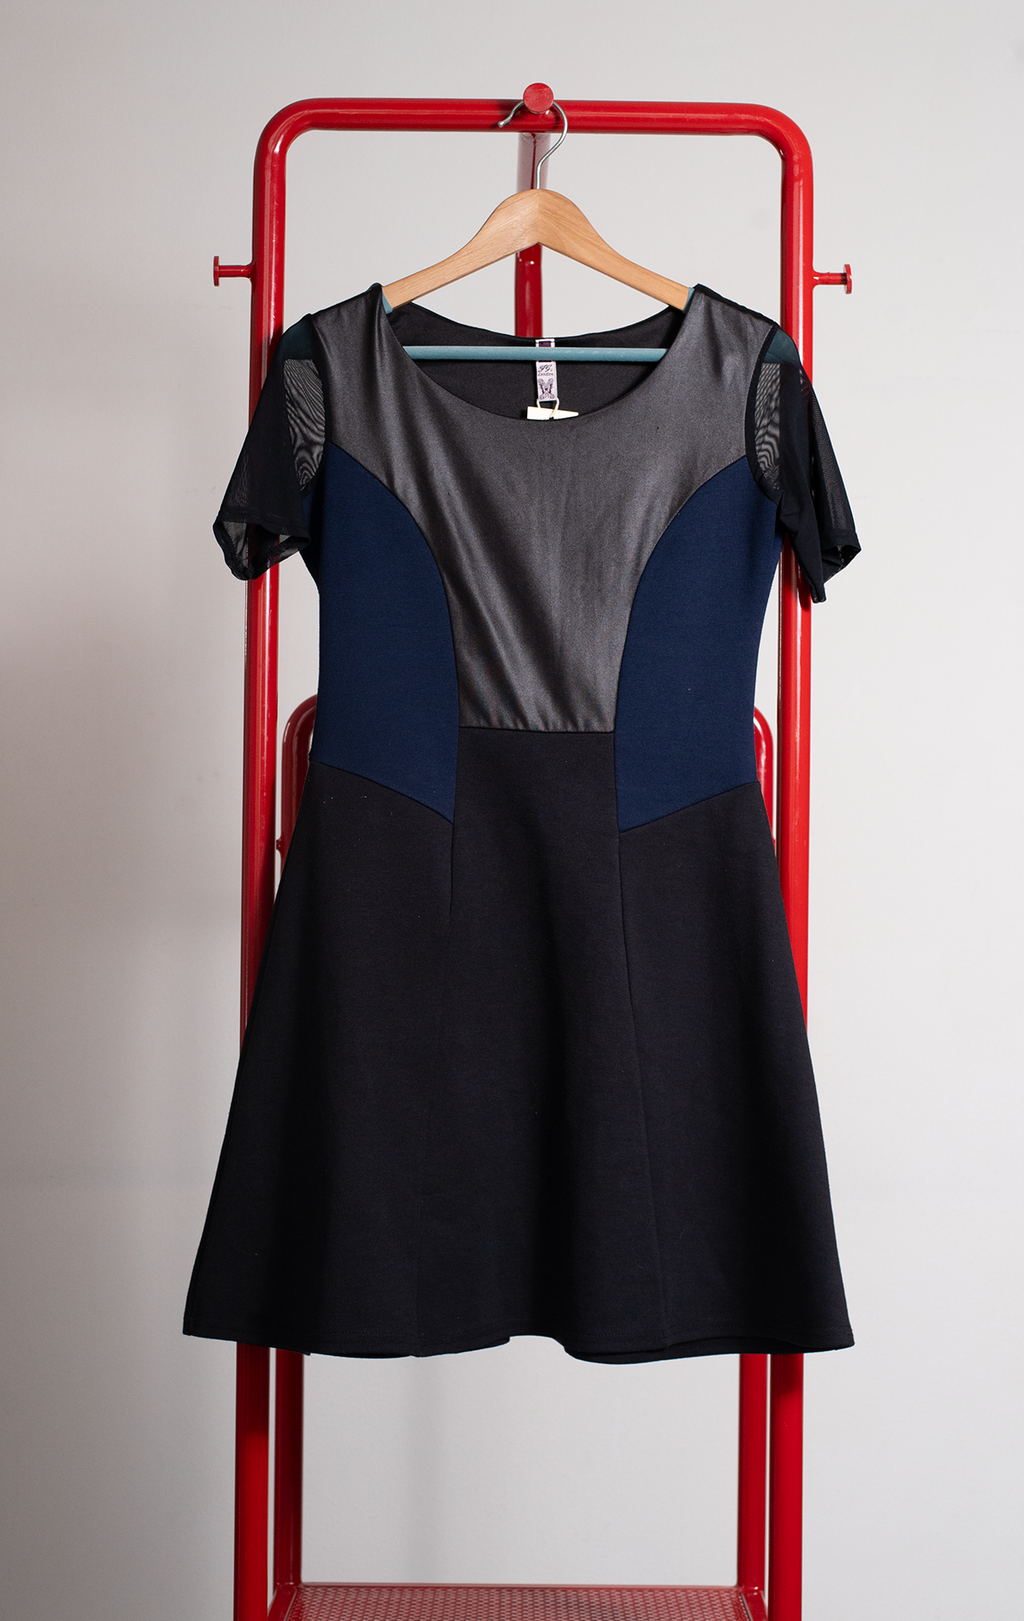 LONDON DRESS - Black & navy leather & mesh details - Medium